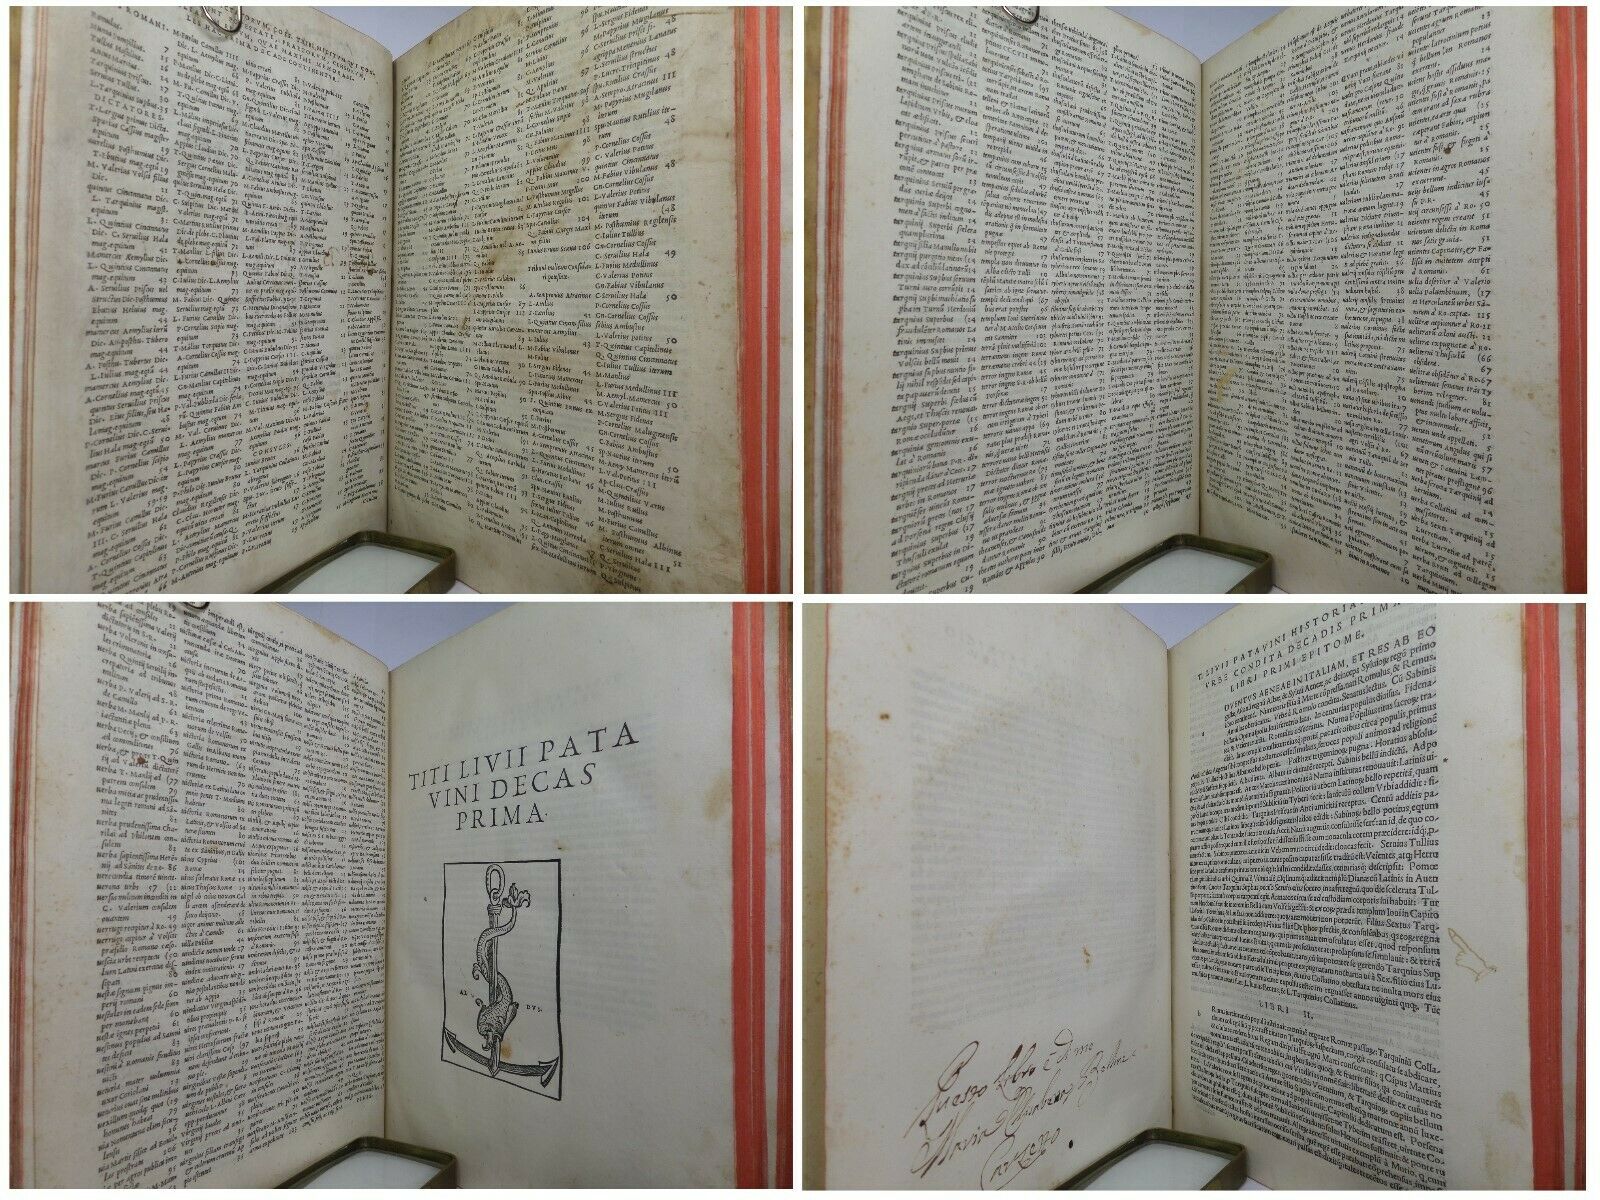 LIVY'S HISTORY OF ROME [AB URBE CONDITA] 1520 - 1521 FIRST FOLIO ALDINE EDITION